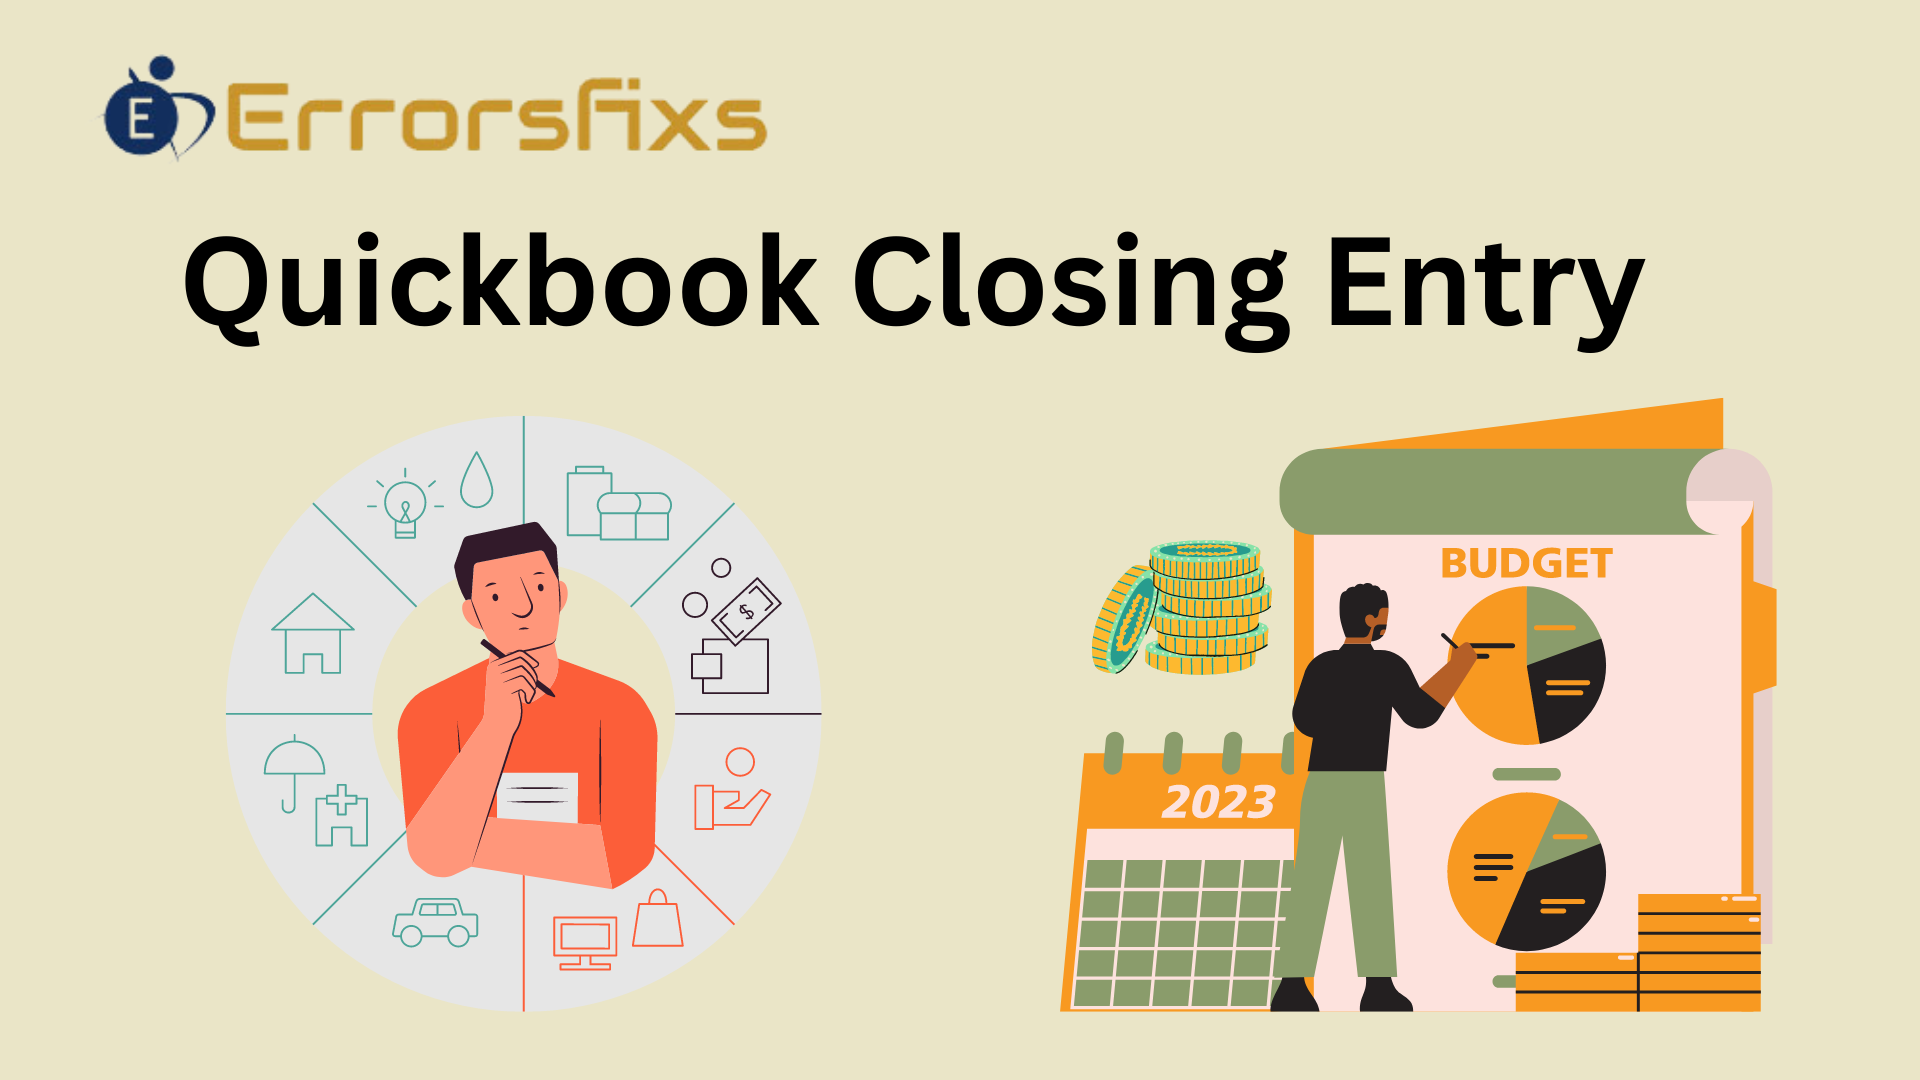 QuickBooks Closing Entry